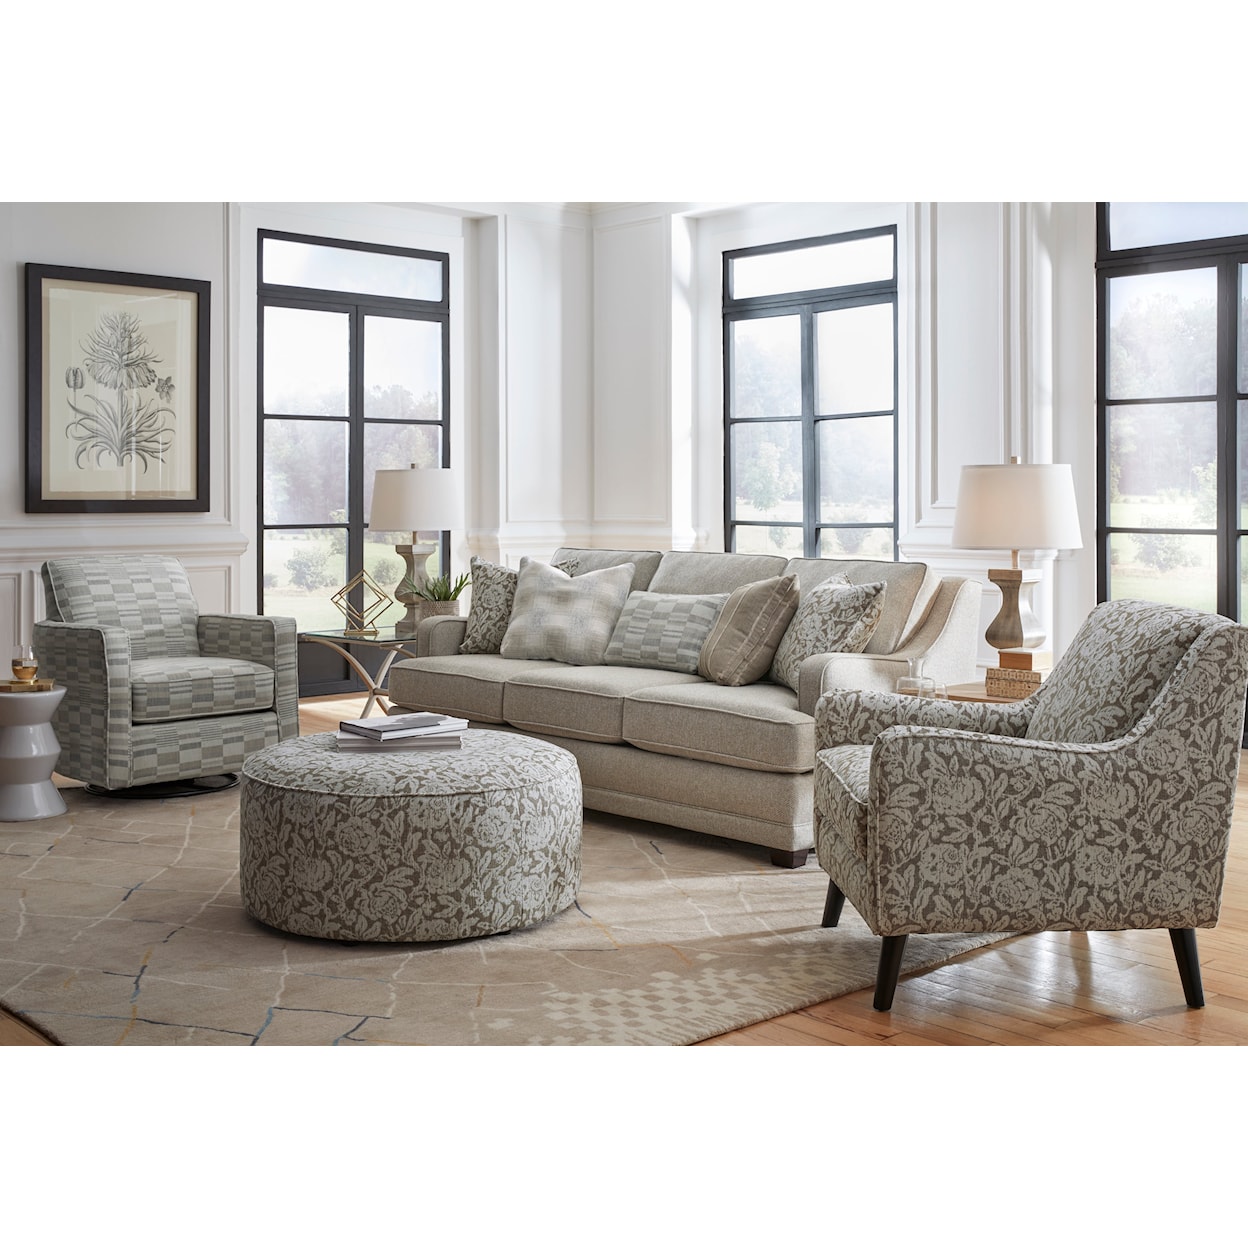 Fusion Furniture 7000 MISSIONARY RAFFIA Living Room Set